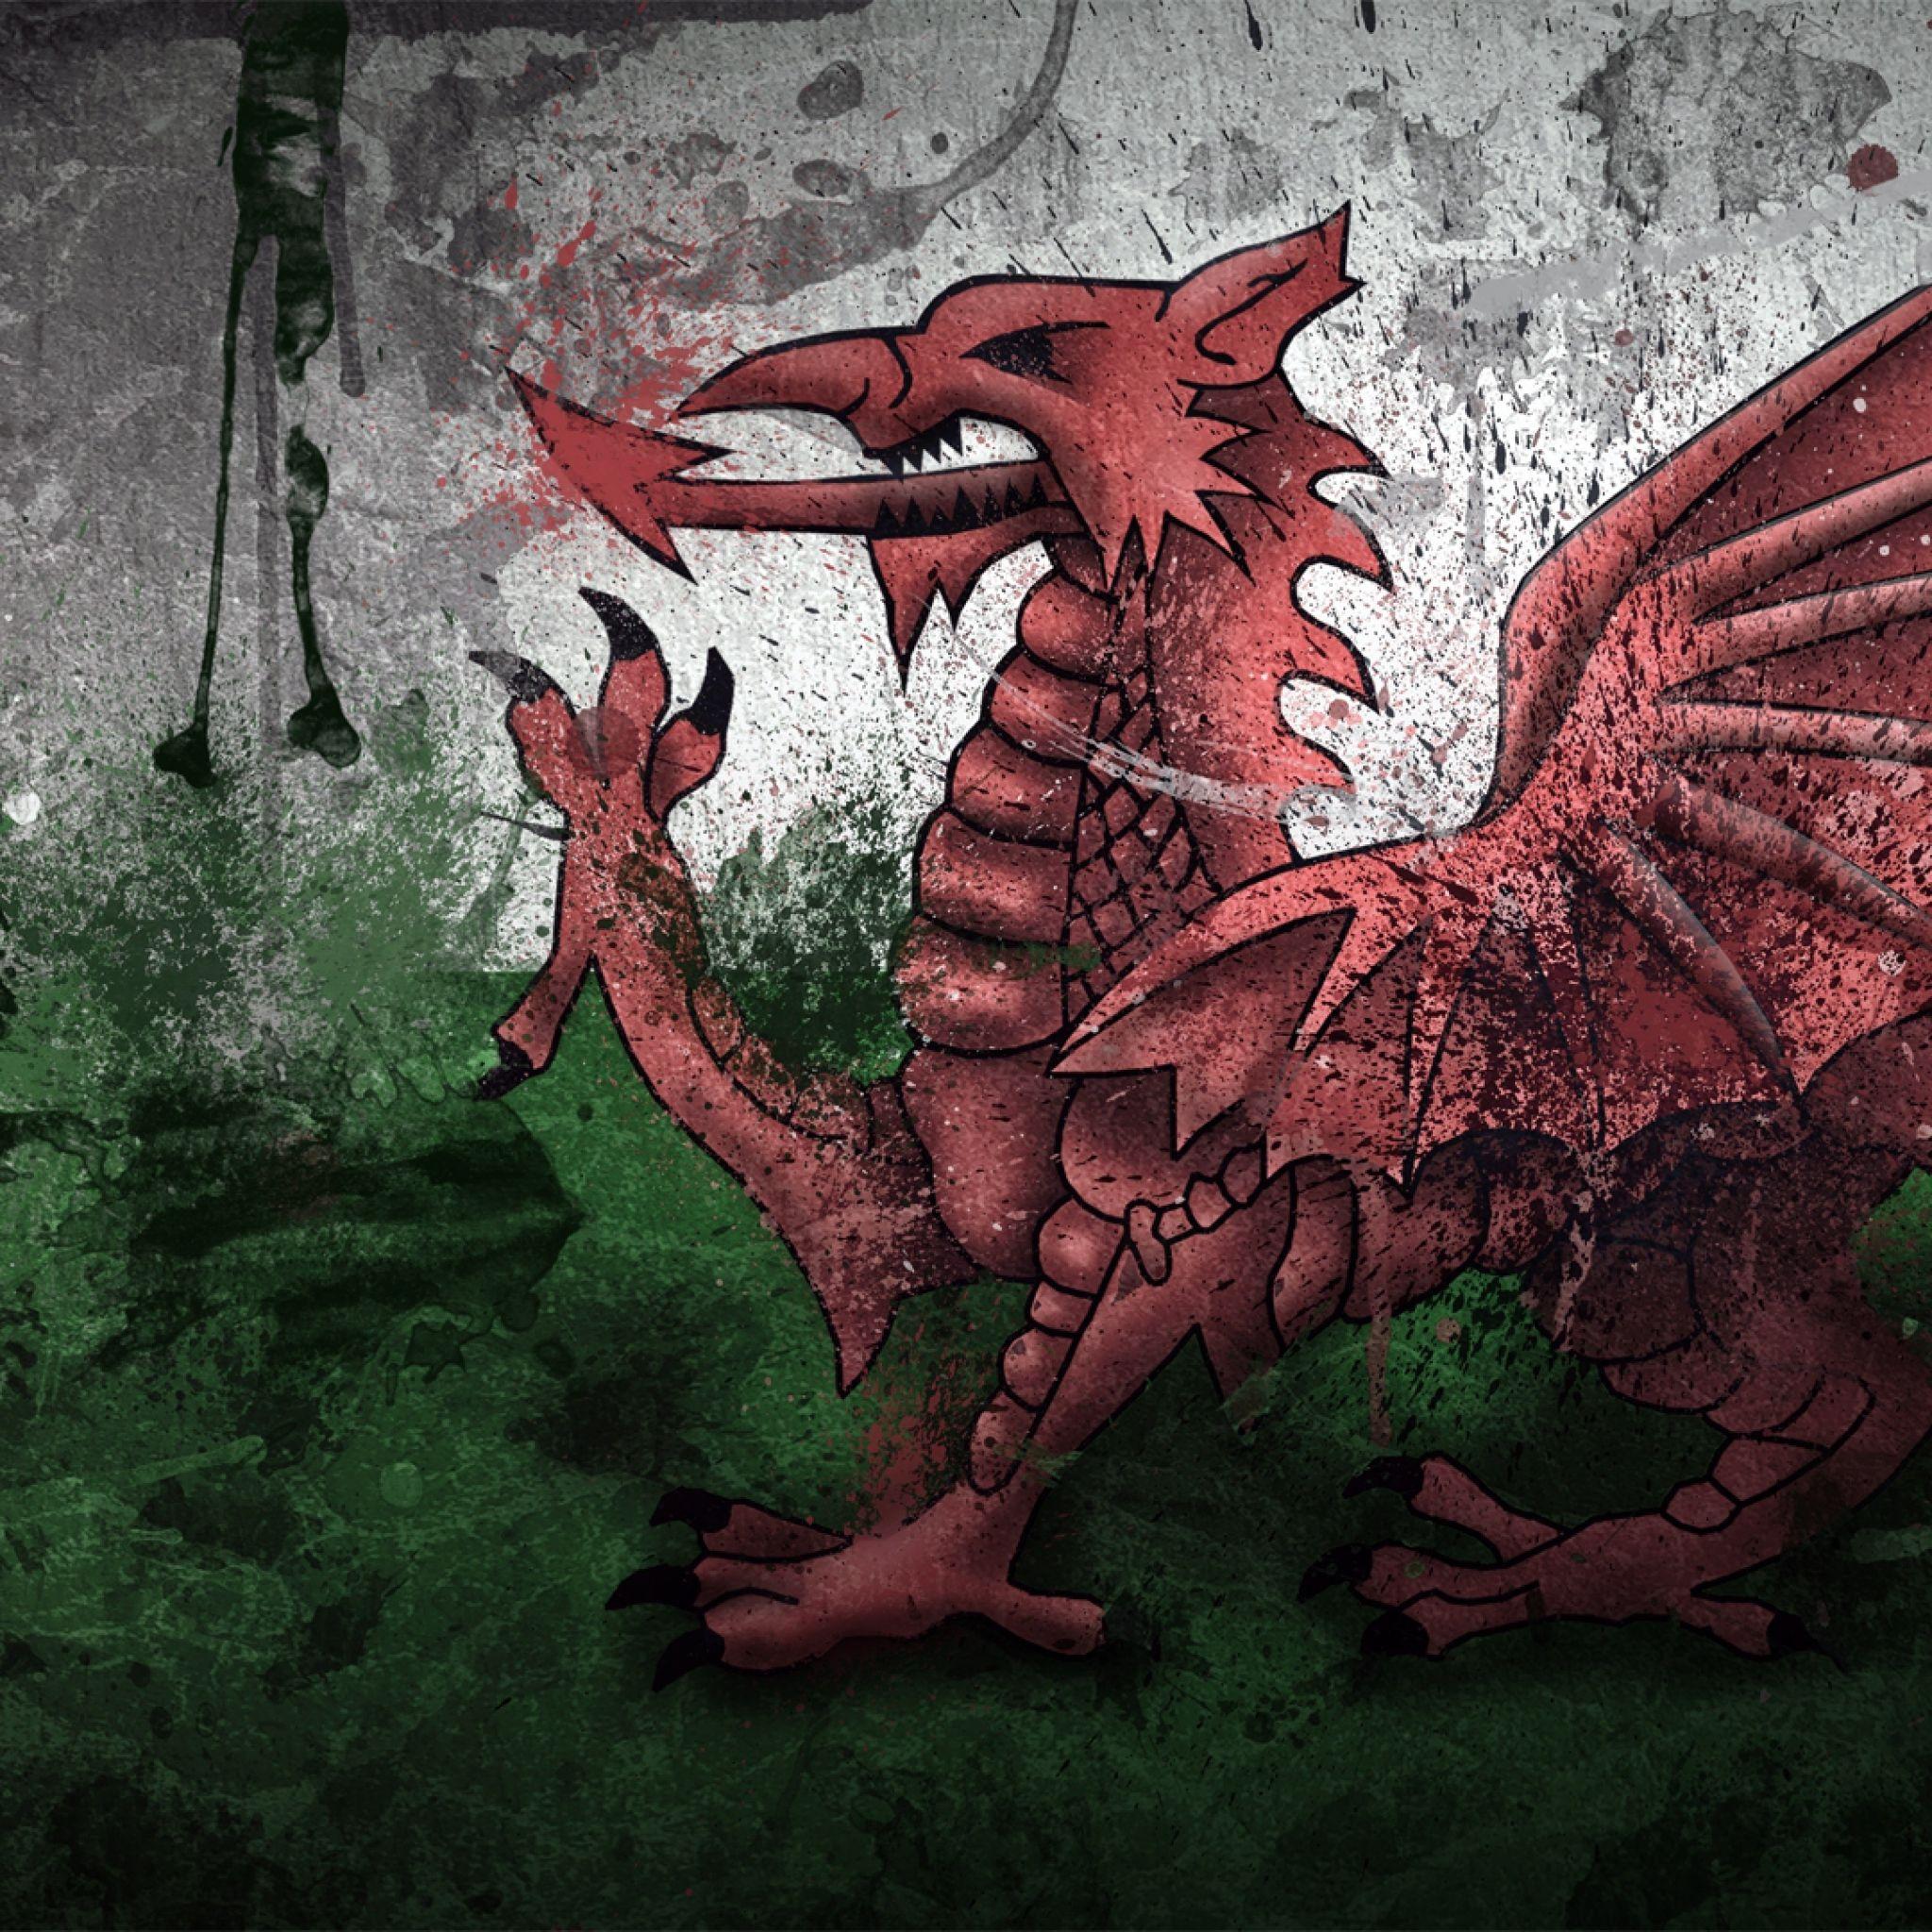 پرچم ولز (Flag of Wales)